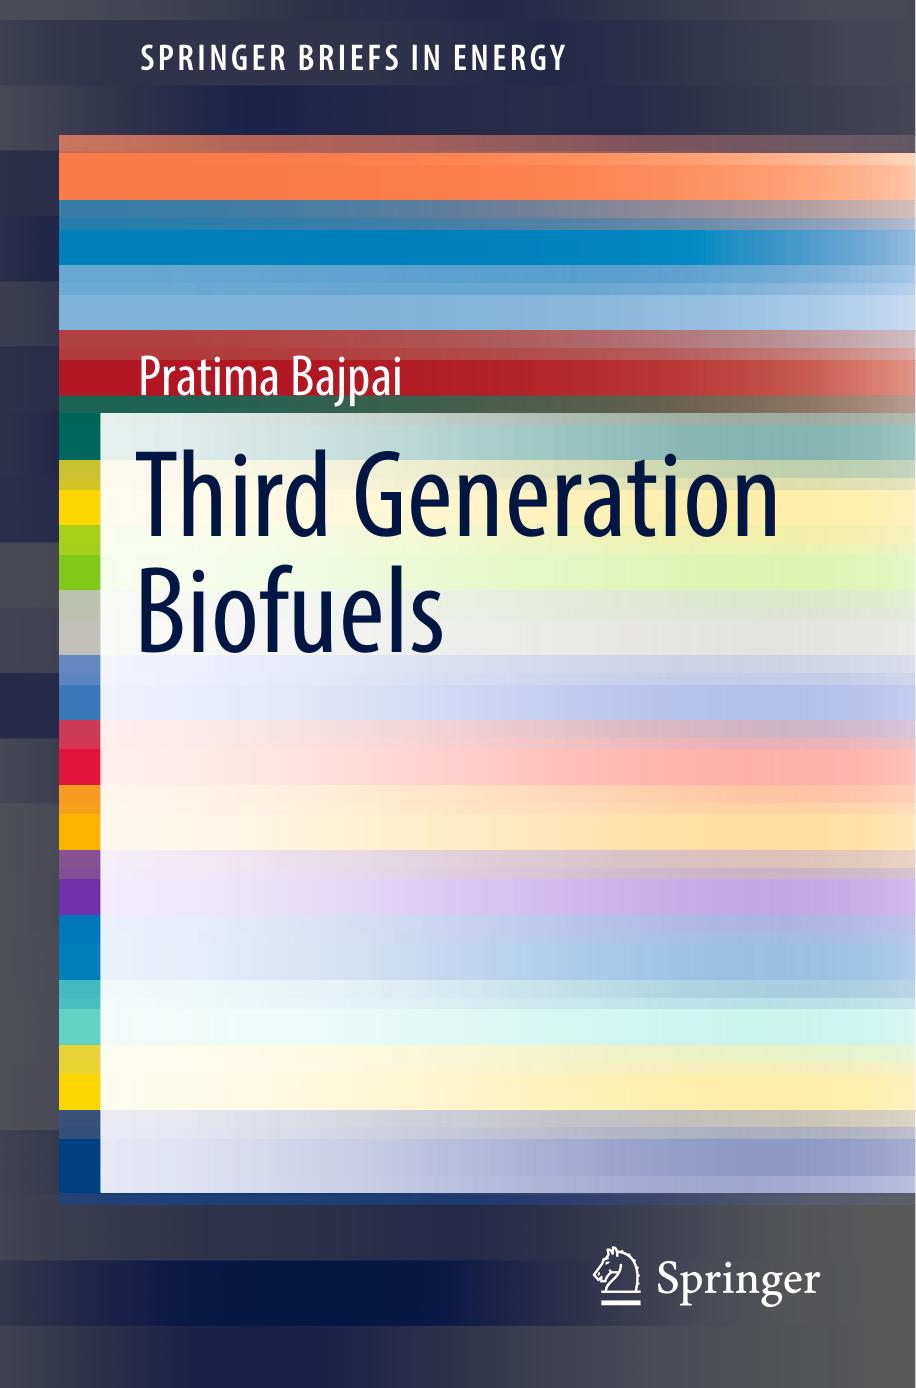 Third Generation Biofuels by Pratima Bajpai